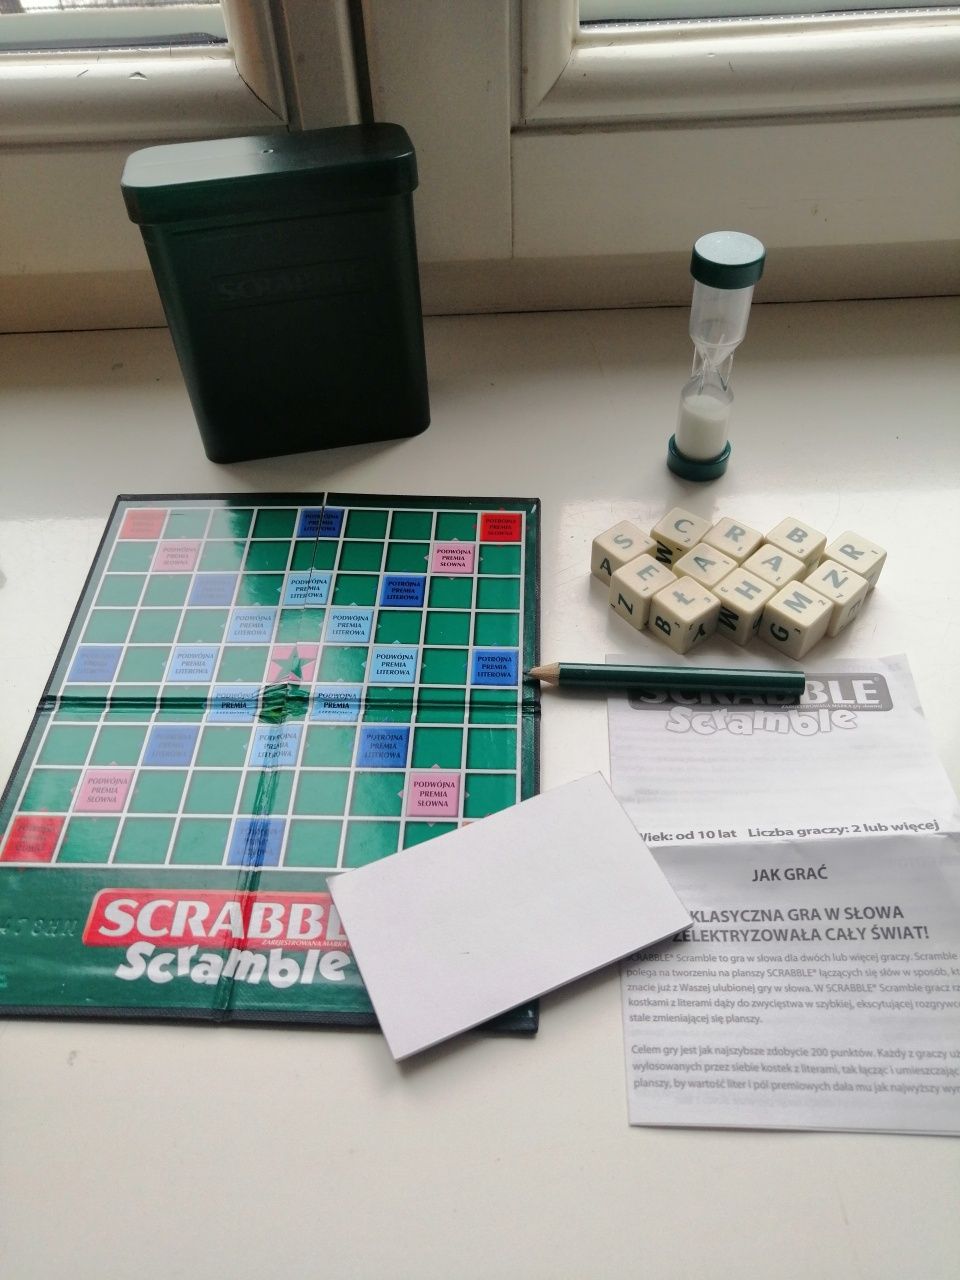 Scrabble, scramble